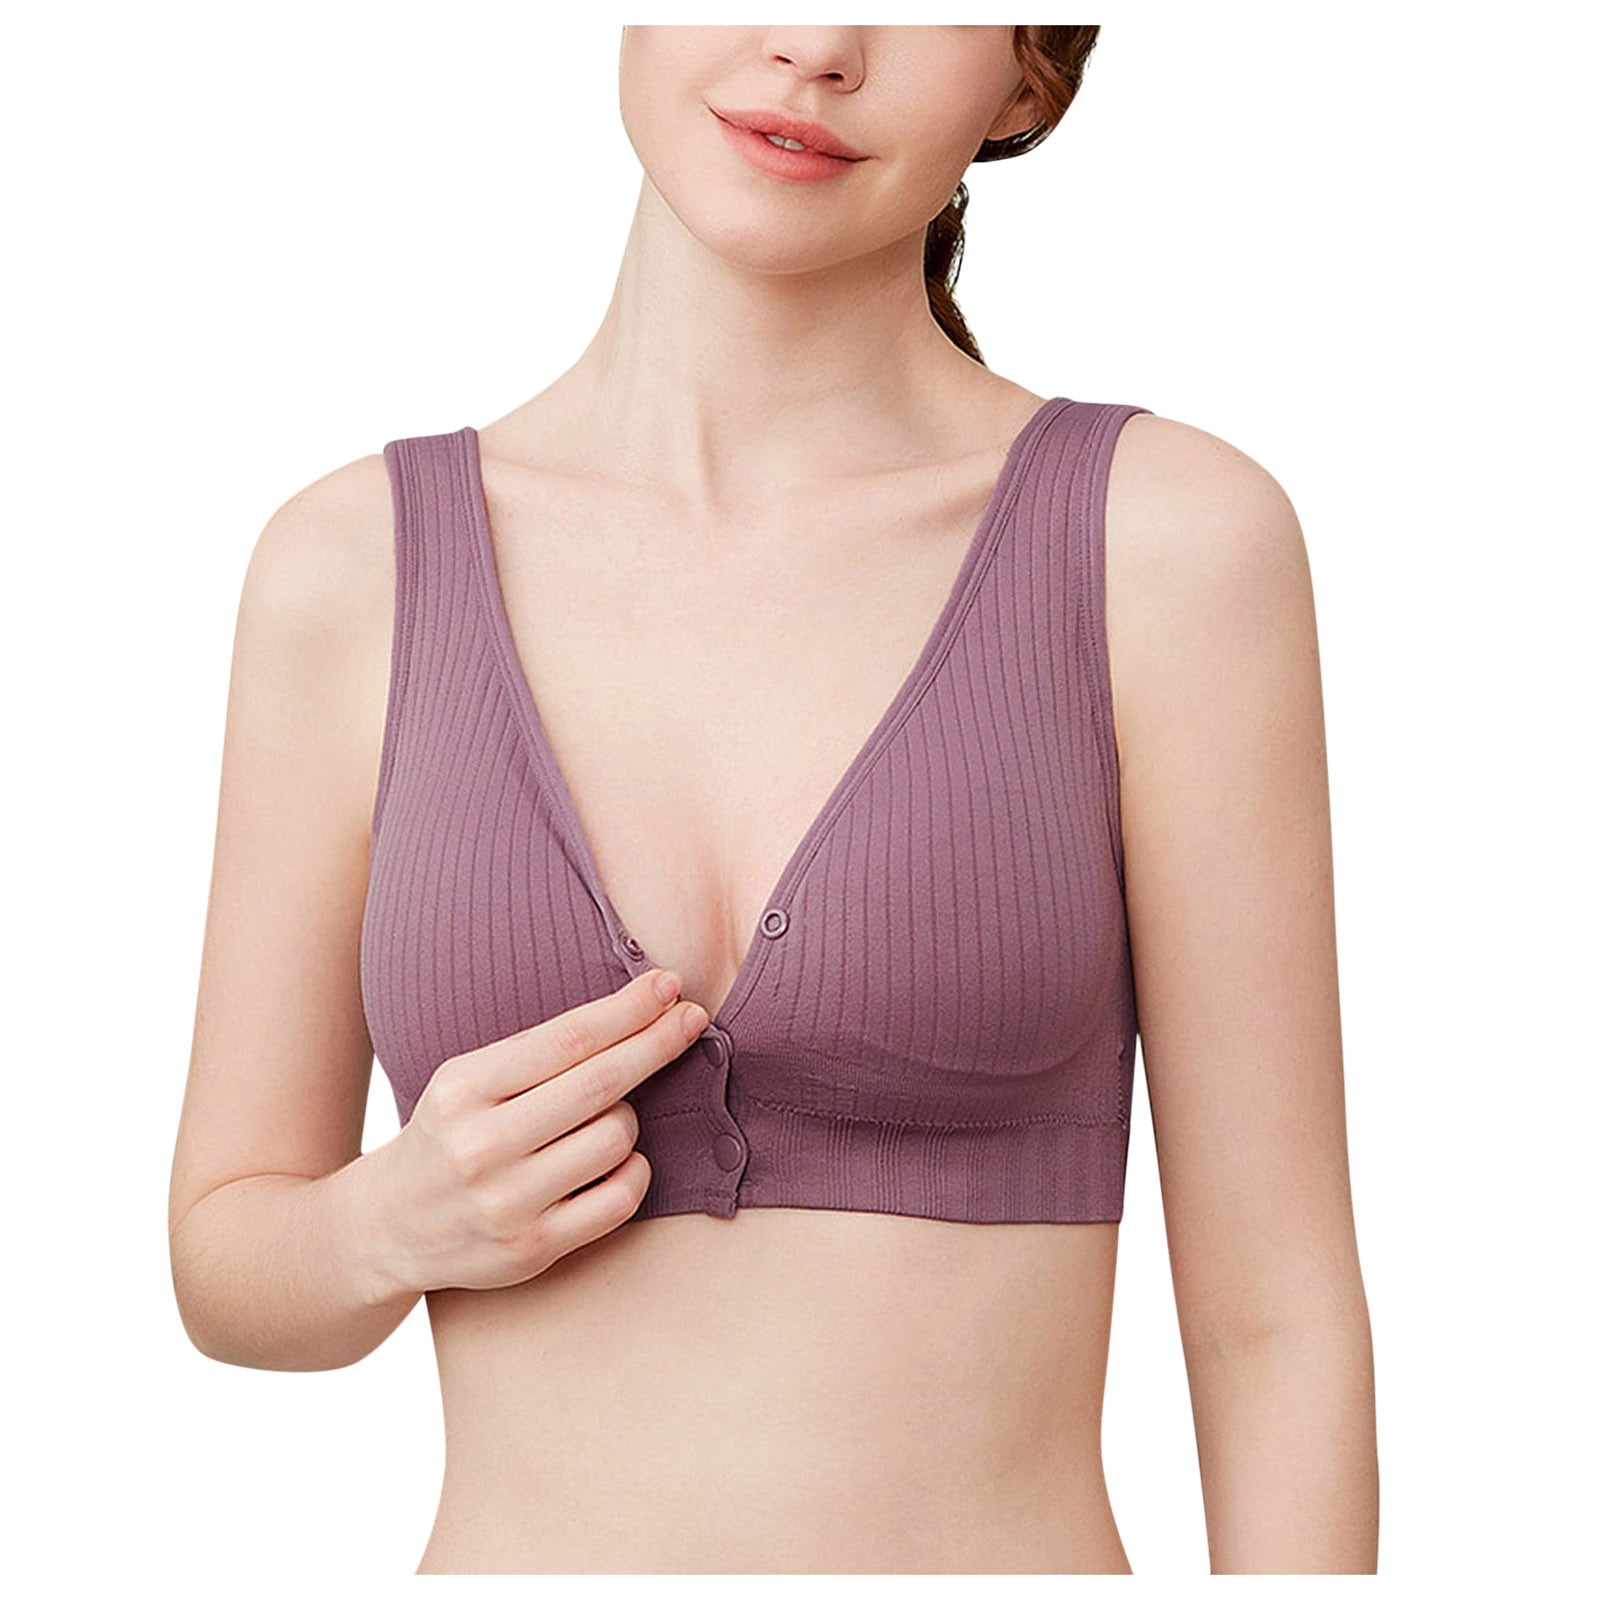 Purple Bra-jama SET by Breastmates - Breastfeeding Sleepwear -  Breastfeeding Top